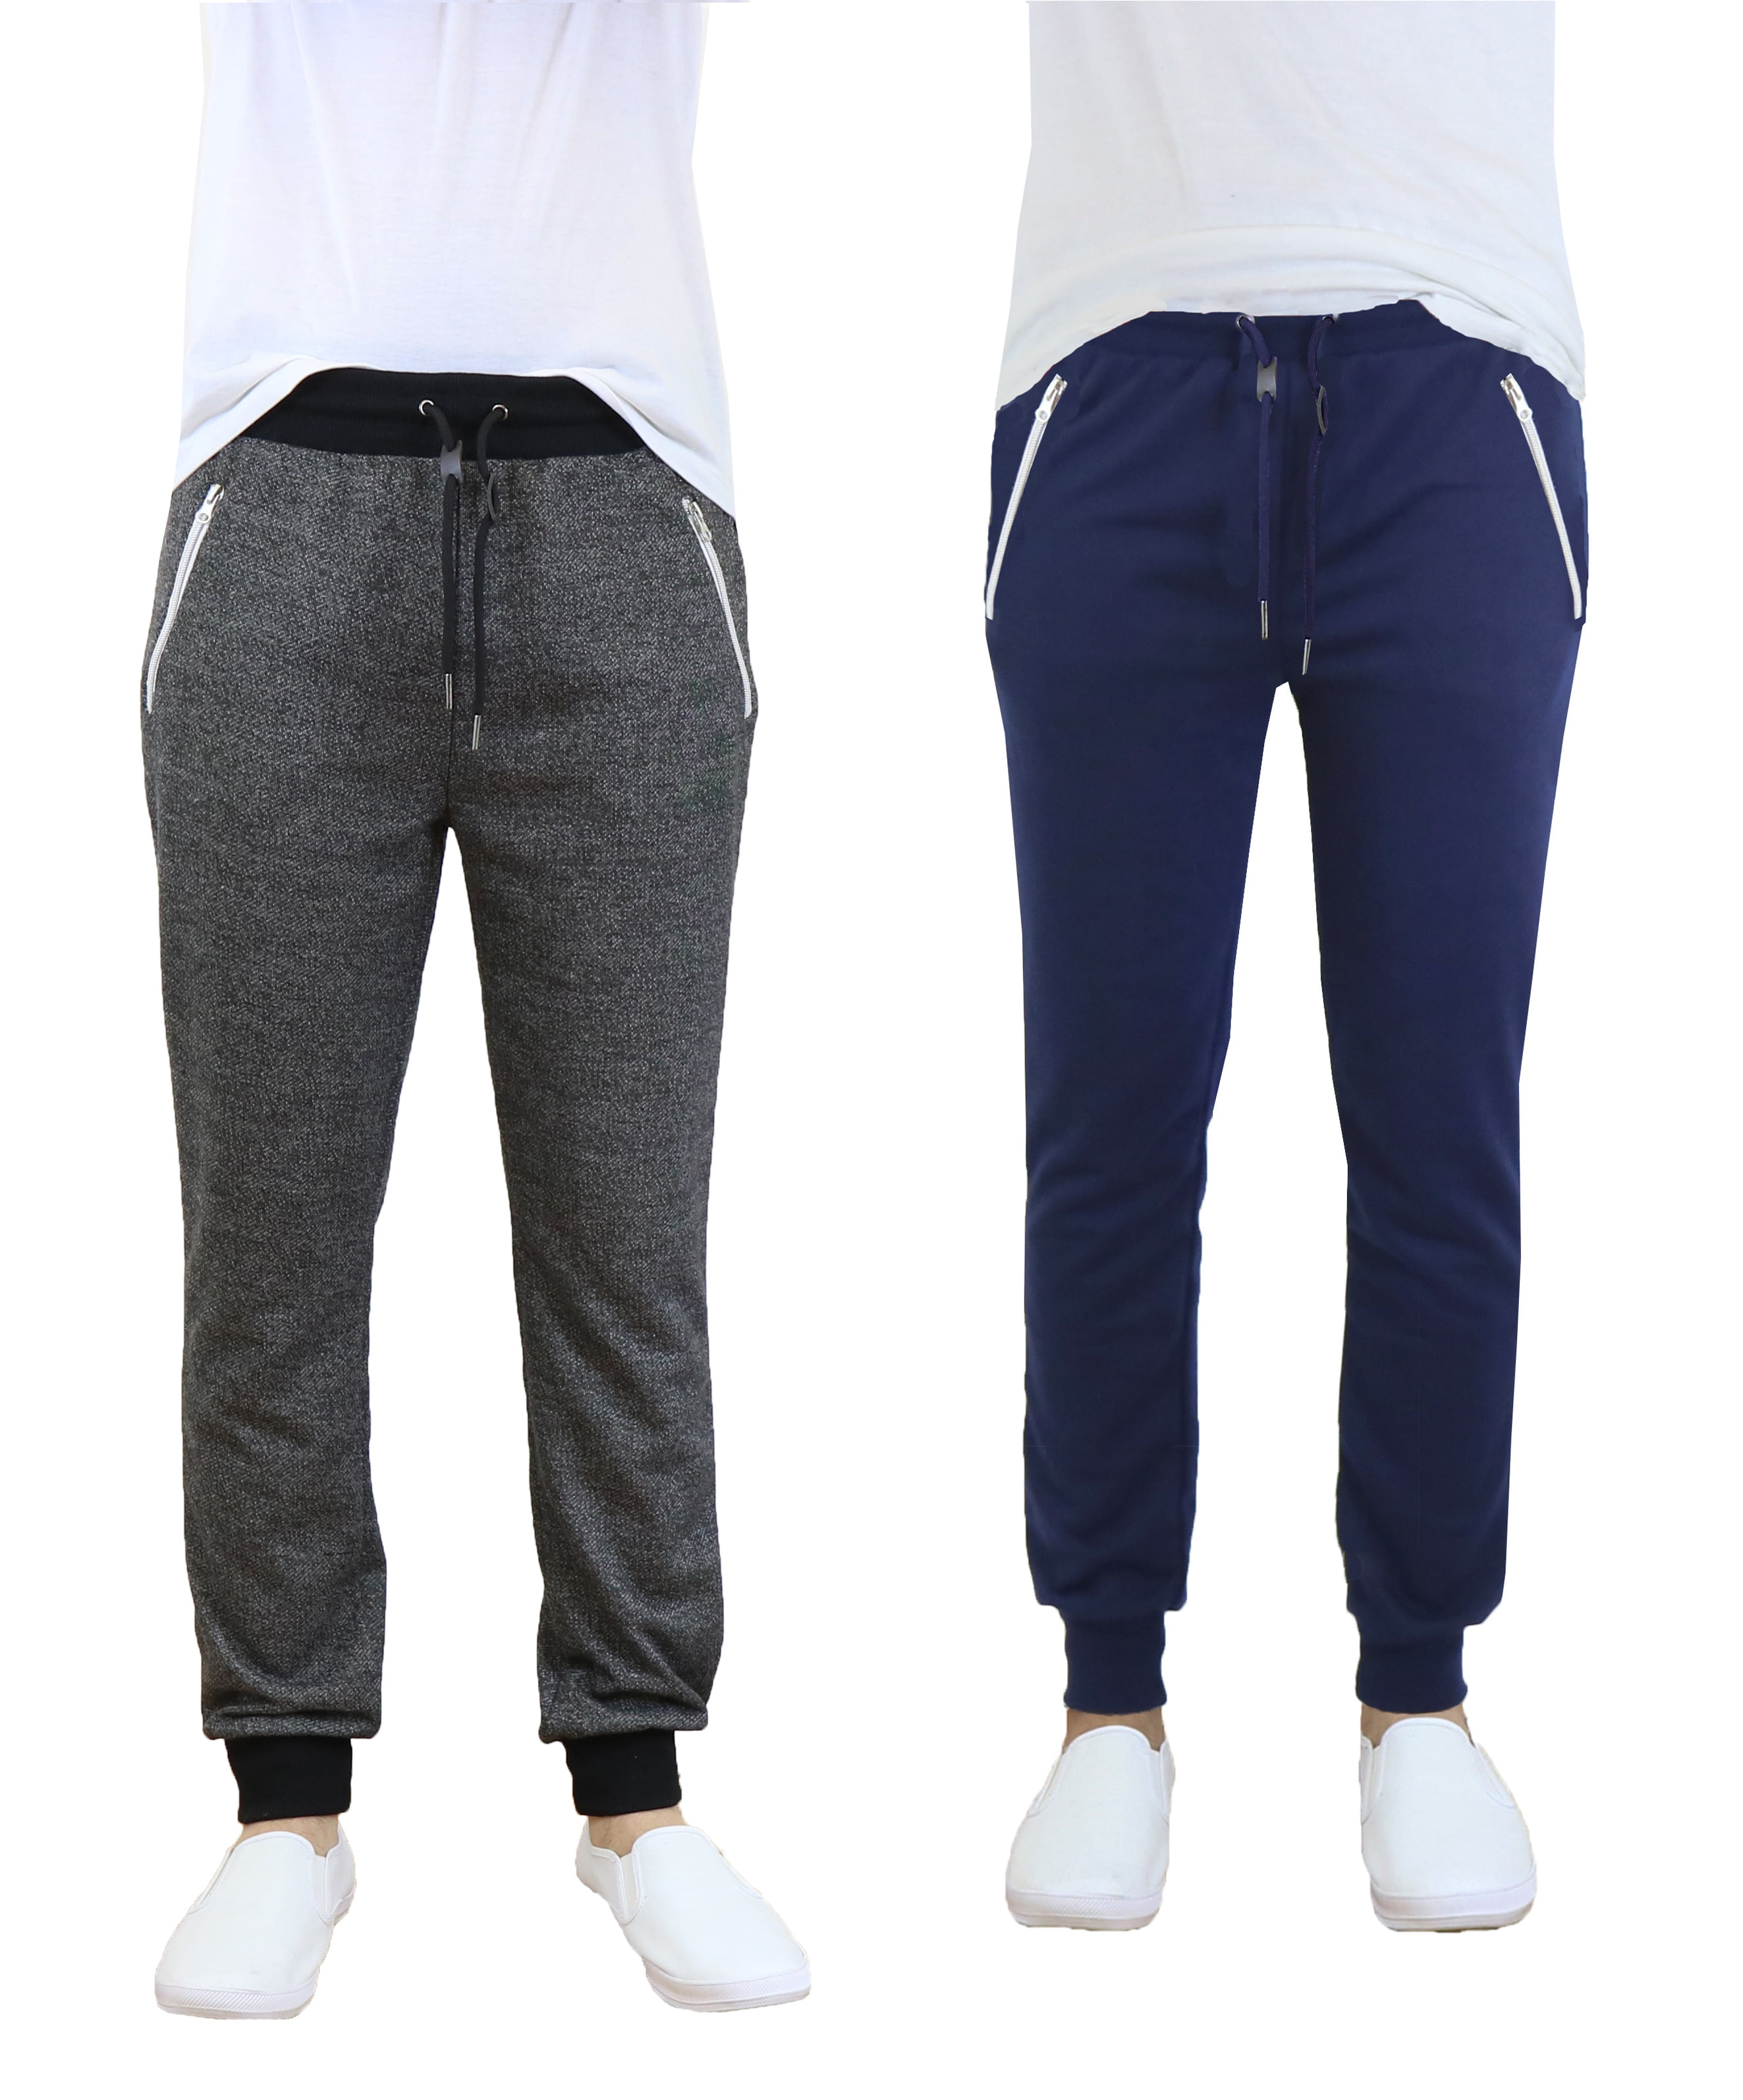 GBH - Men's Jogger Sweatpants With Zipper Pockets (2-Pack) - Walmart